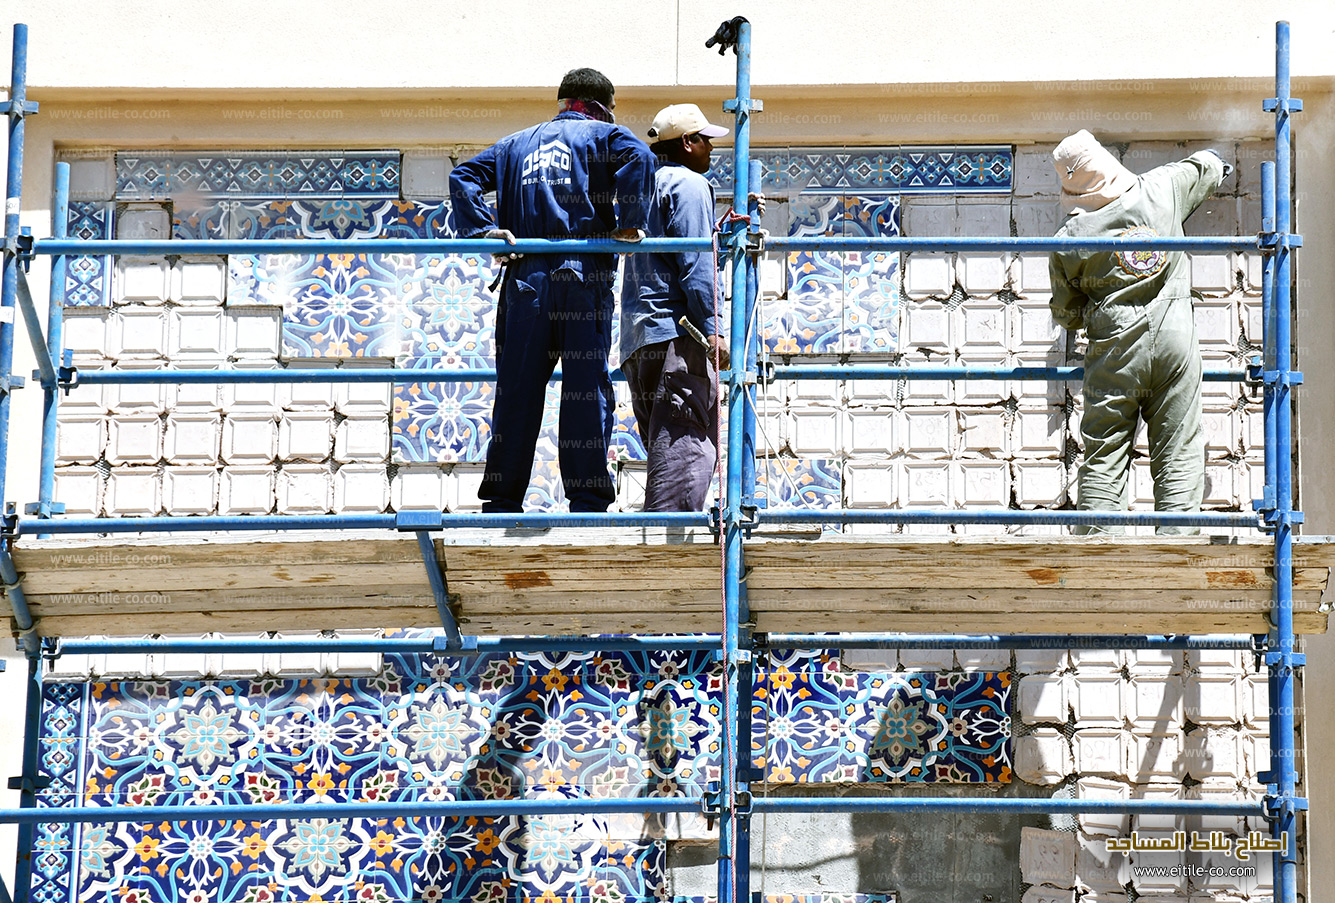 Oman, Sohar Sultan Qaboos grand mosque tile restoration work, www.eitile-co.com